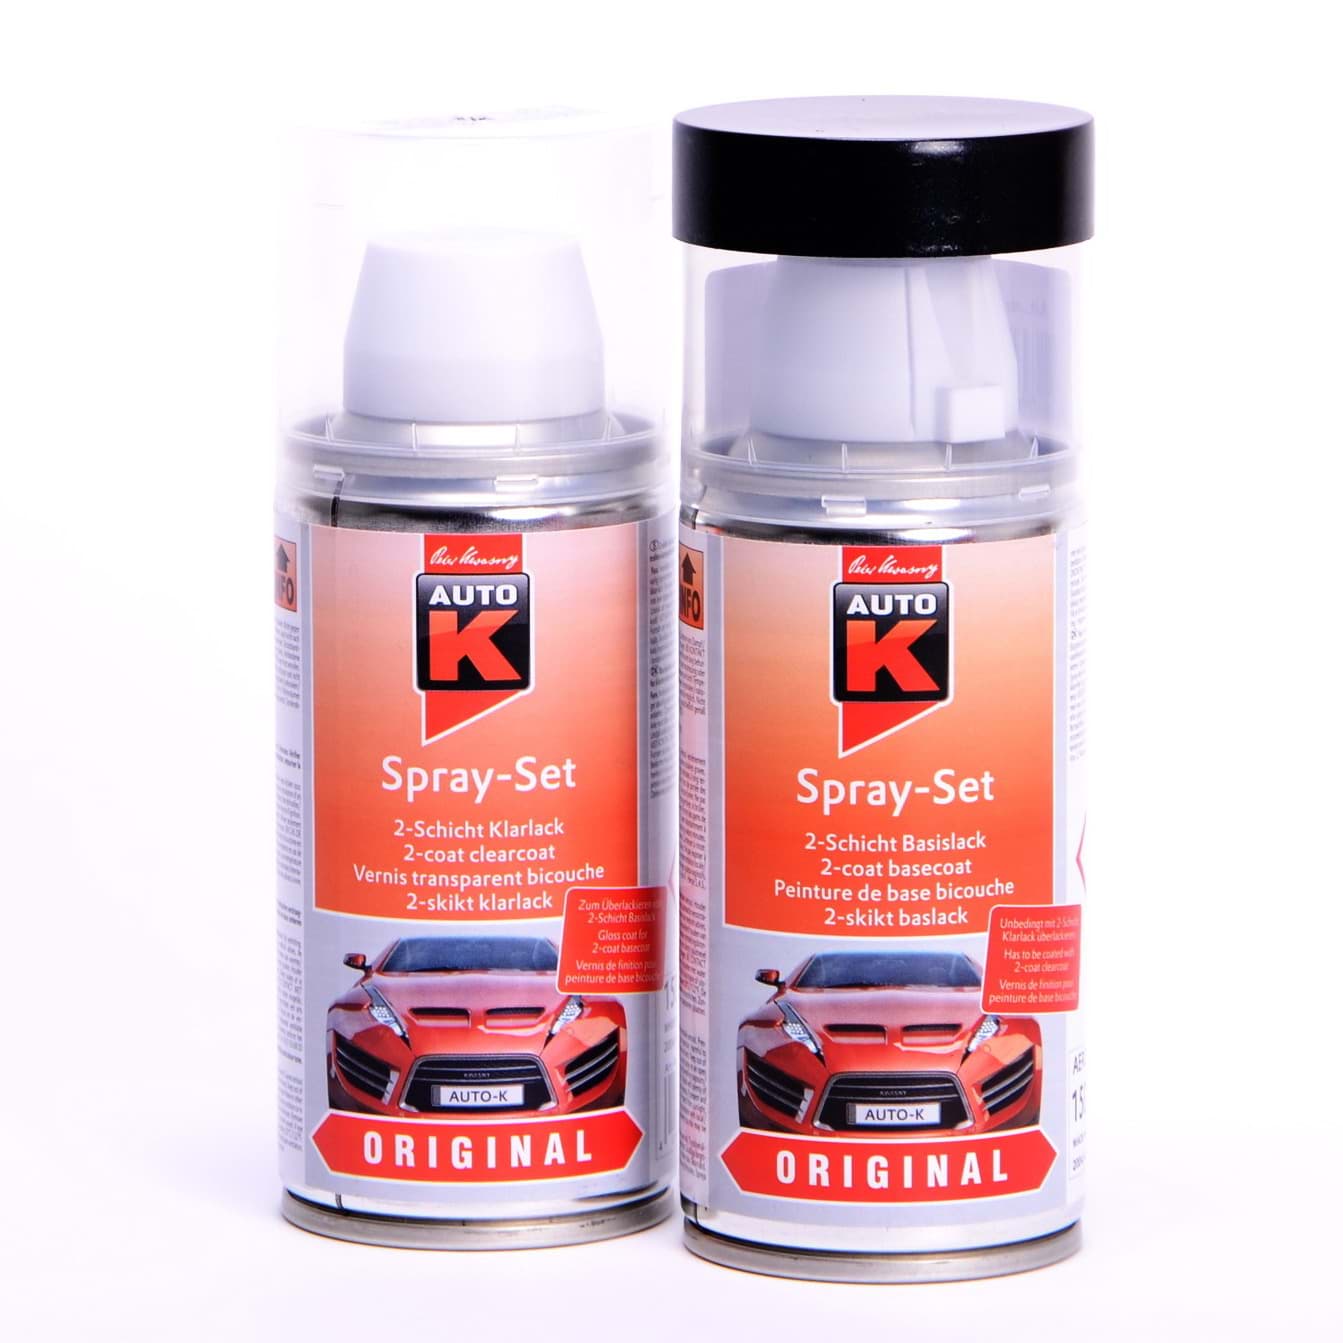 Afbeelding van Auto-K Spray-Set Autolack für Opel 298 Mitternachtsschwarz met 21462